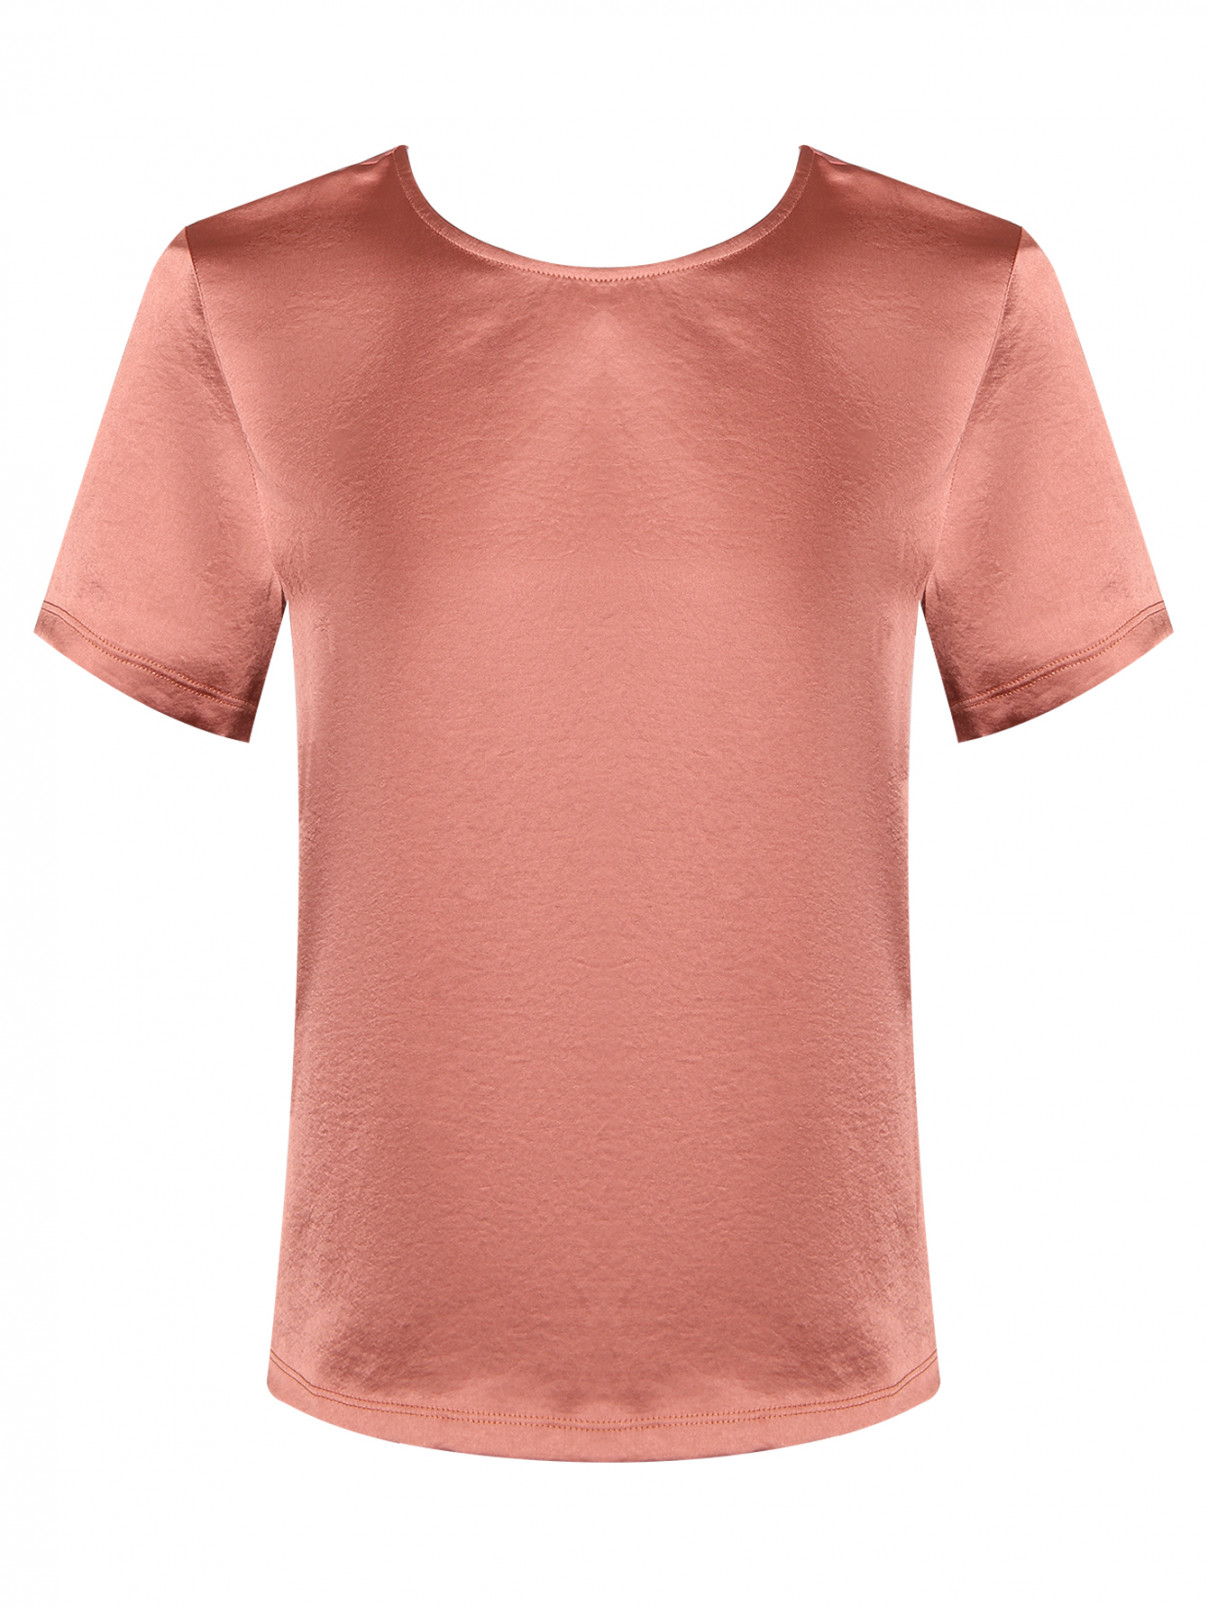 Блуза с короткими рукавами Weekend Max Mara  –  Общий вид  – Цвет:  Оранжевый